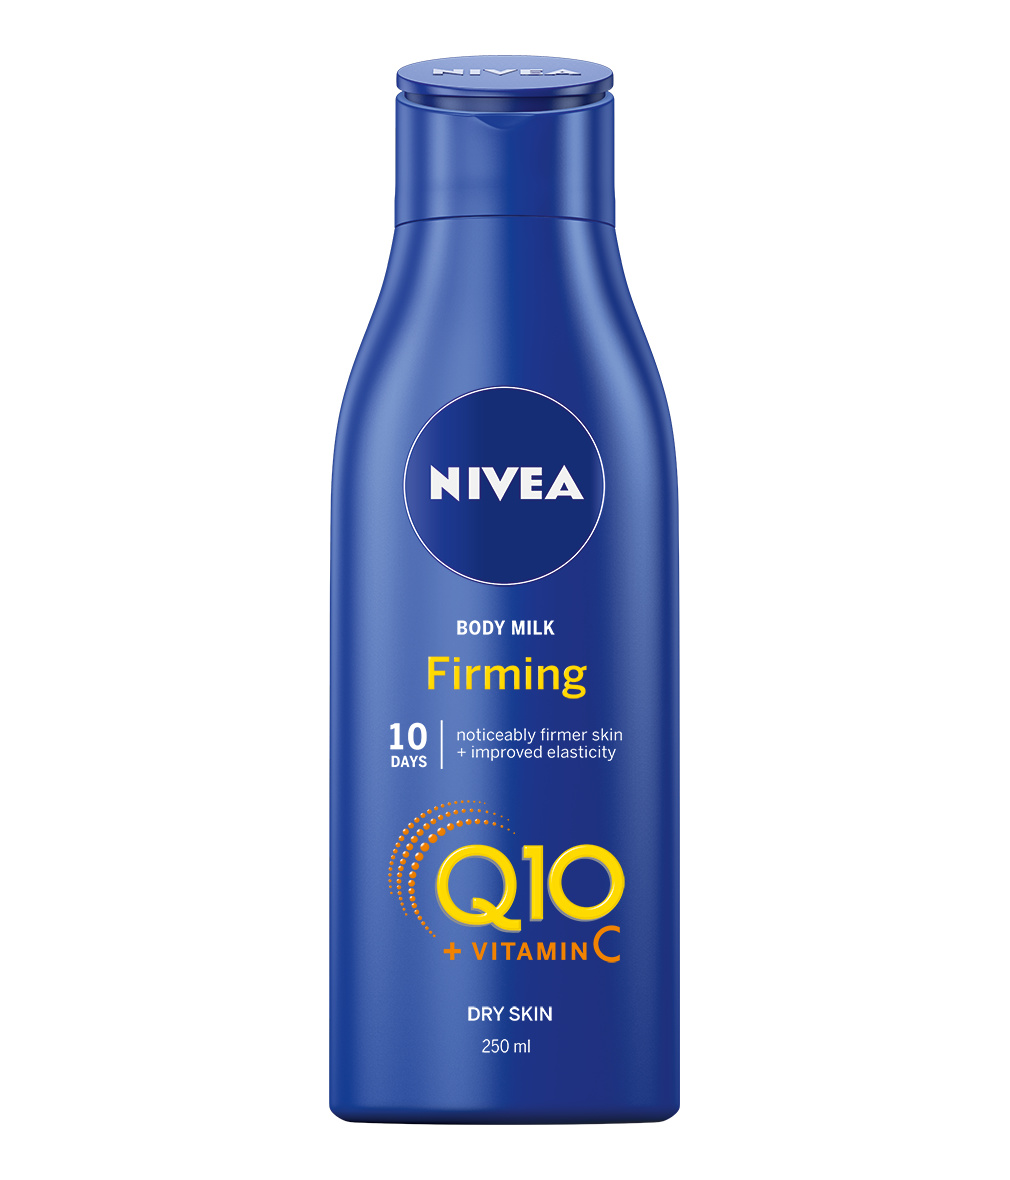 NIVEA Q10 Plus C Firming Body Milk Dry Skin